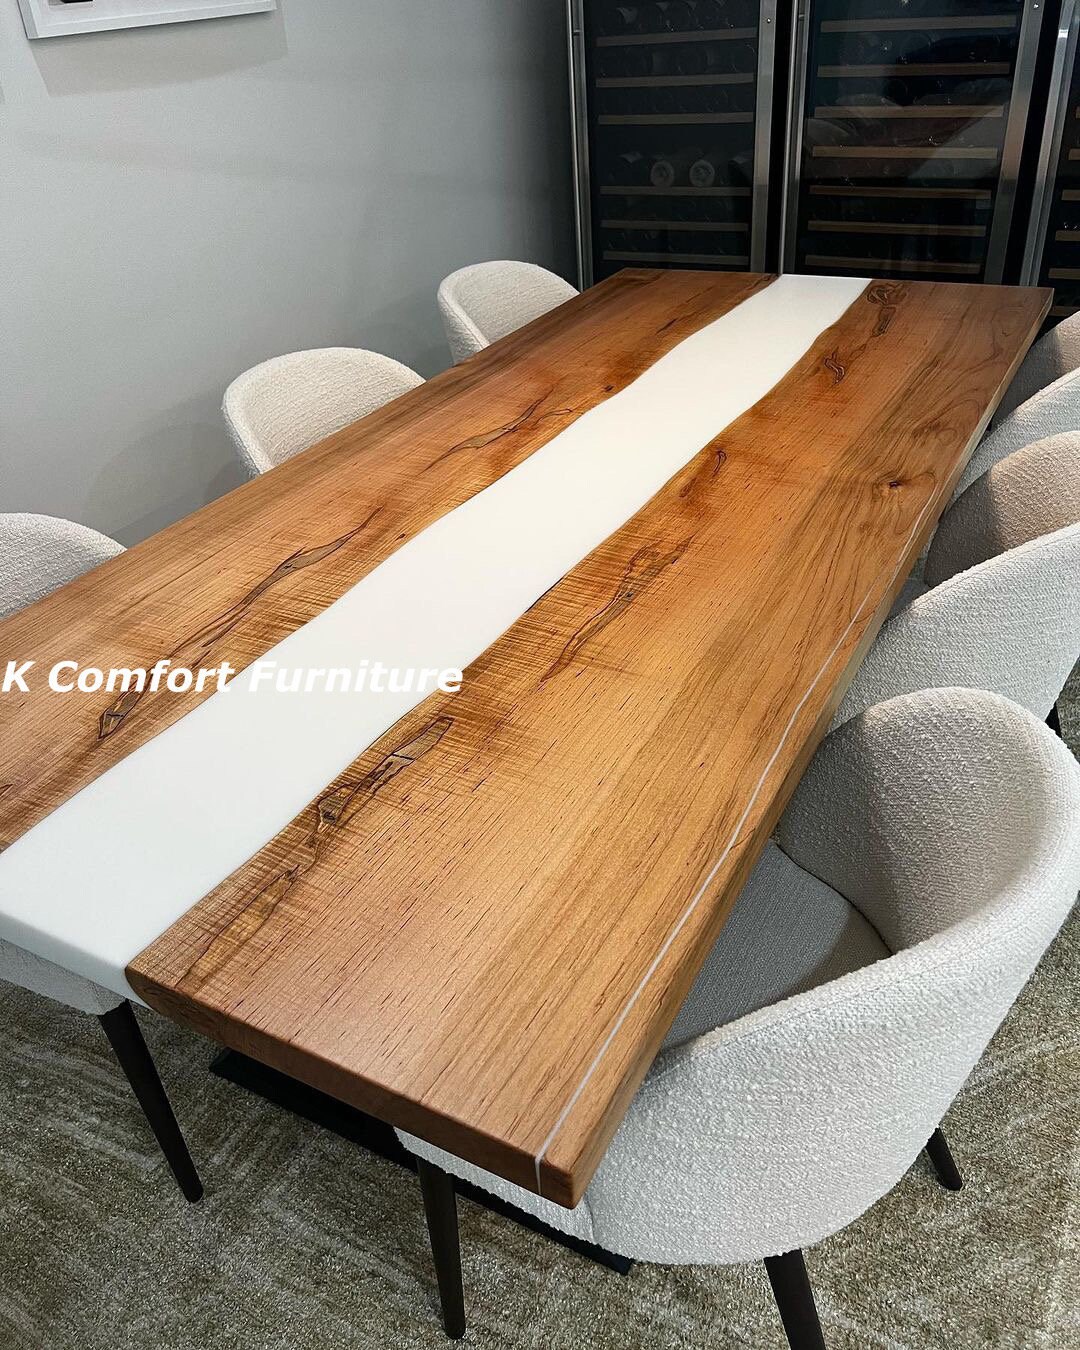 Epoxytable, Dining, Sofa,side, Center Tabletop Live Edge Walnut Table  ,custom Order, Naturalepoxy Resin River Table, Naturalwood 30x60 Inc 